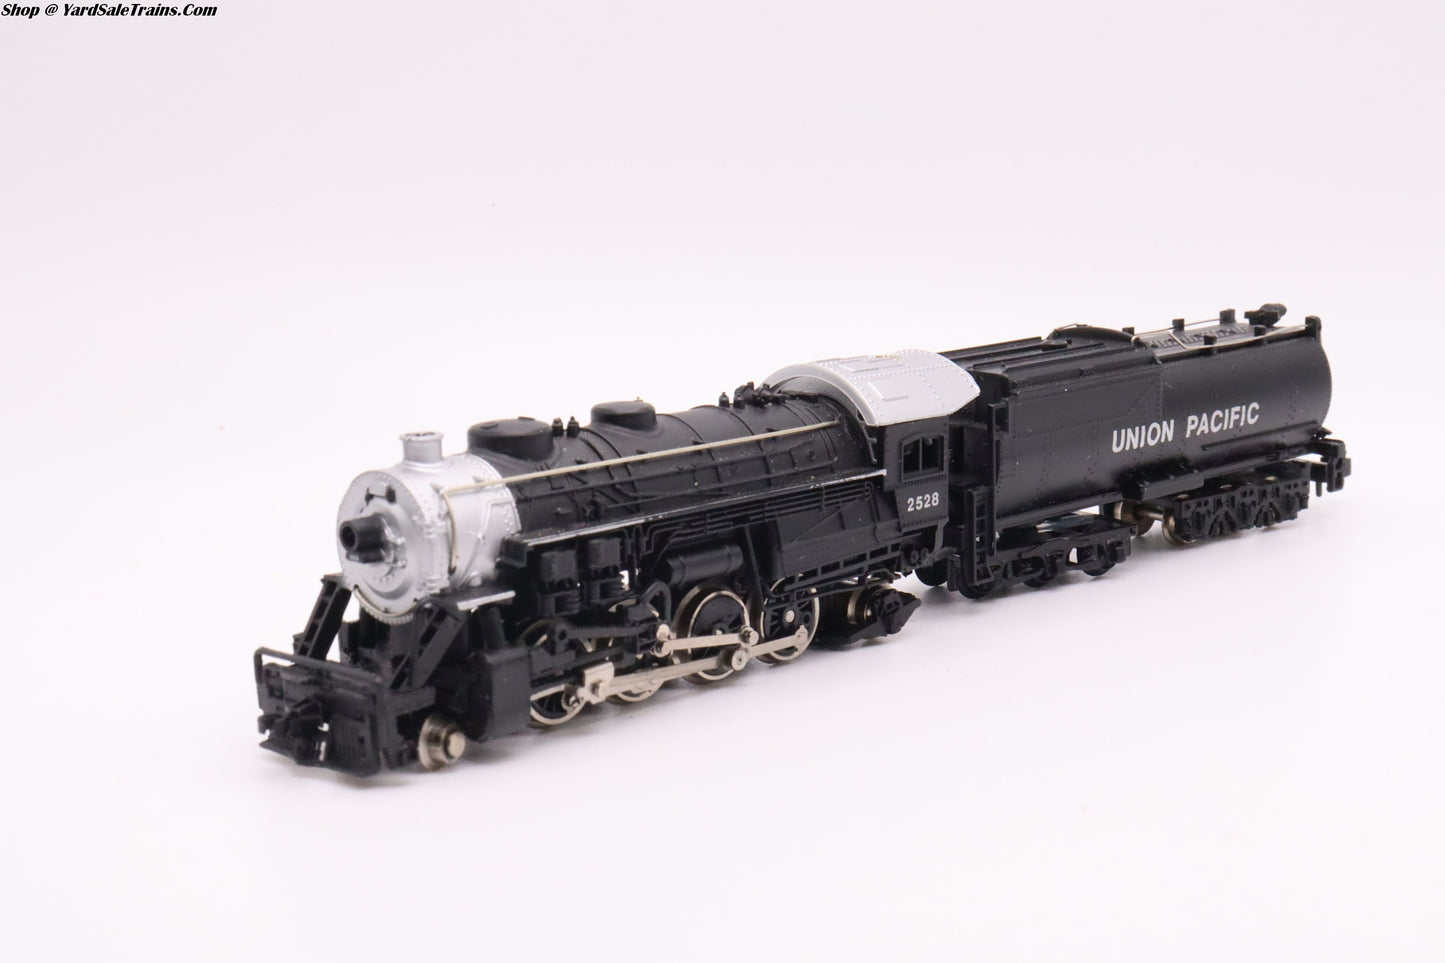 BCH-51-545-01 - Mikado 2-8-2 Steam Locomotive & Vanderbilt Tender - Union Pacific - UP #2528 - N Scale - Preowned